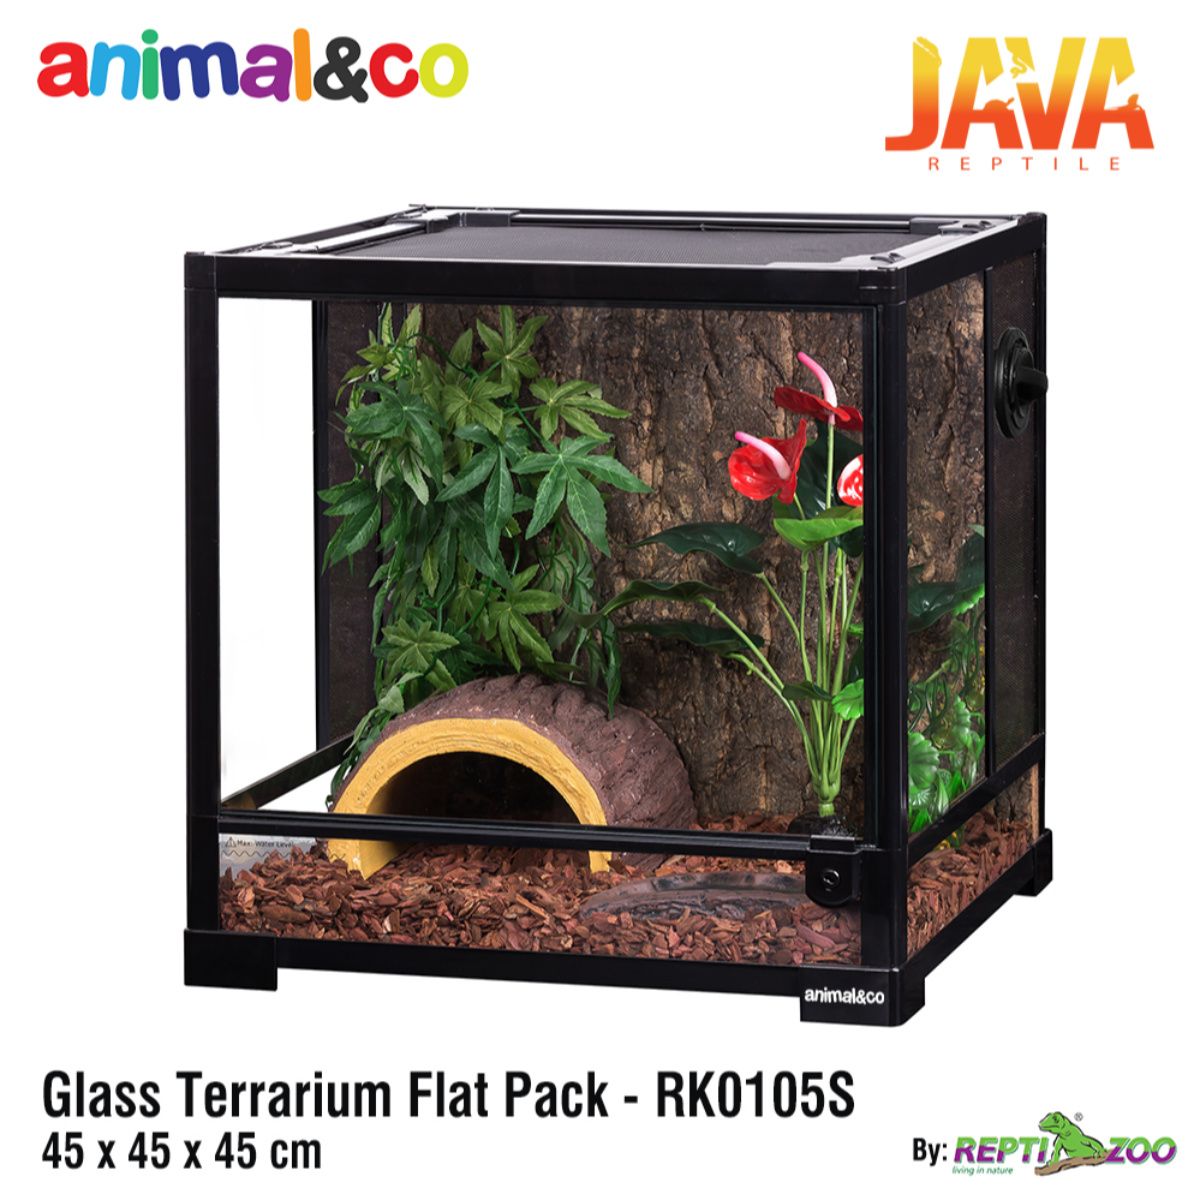 Animal&co Glass Terrarium 45x45x45cm by Reptizoo RK0105S